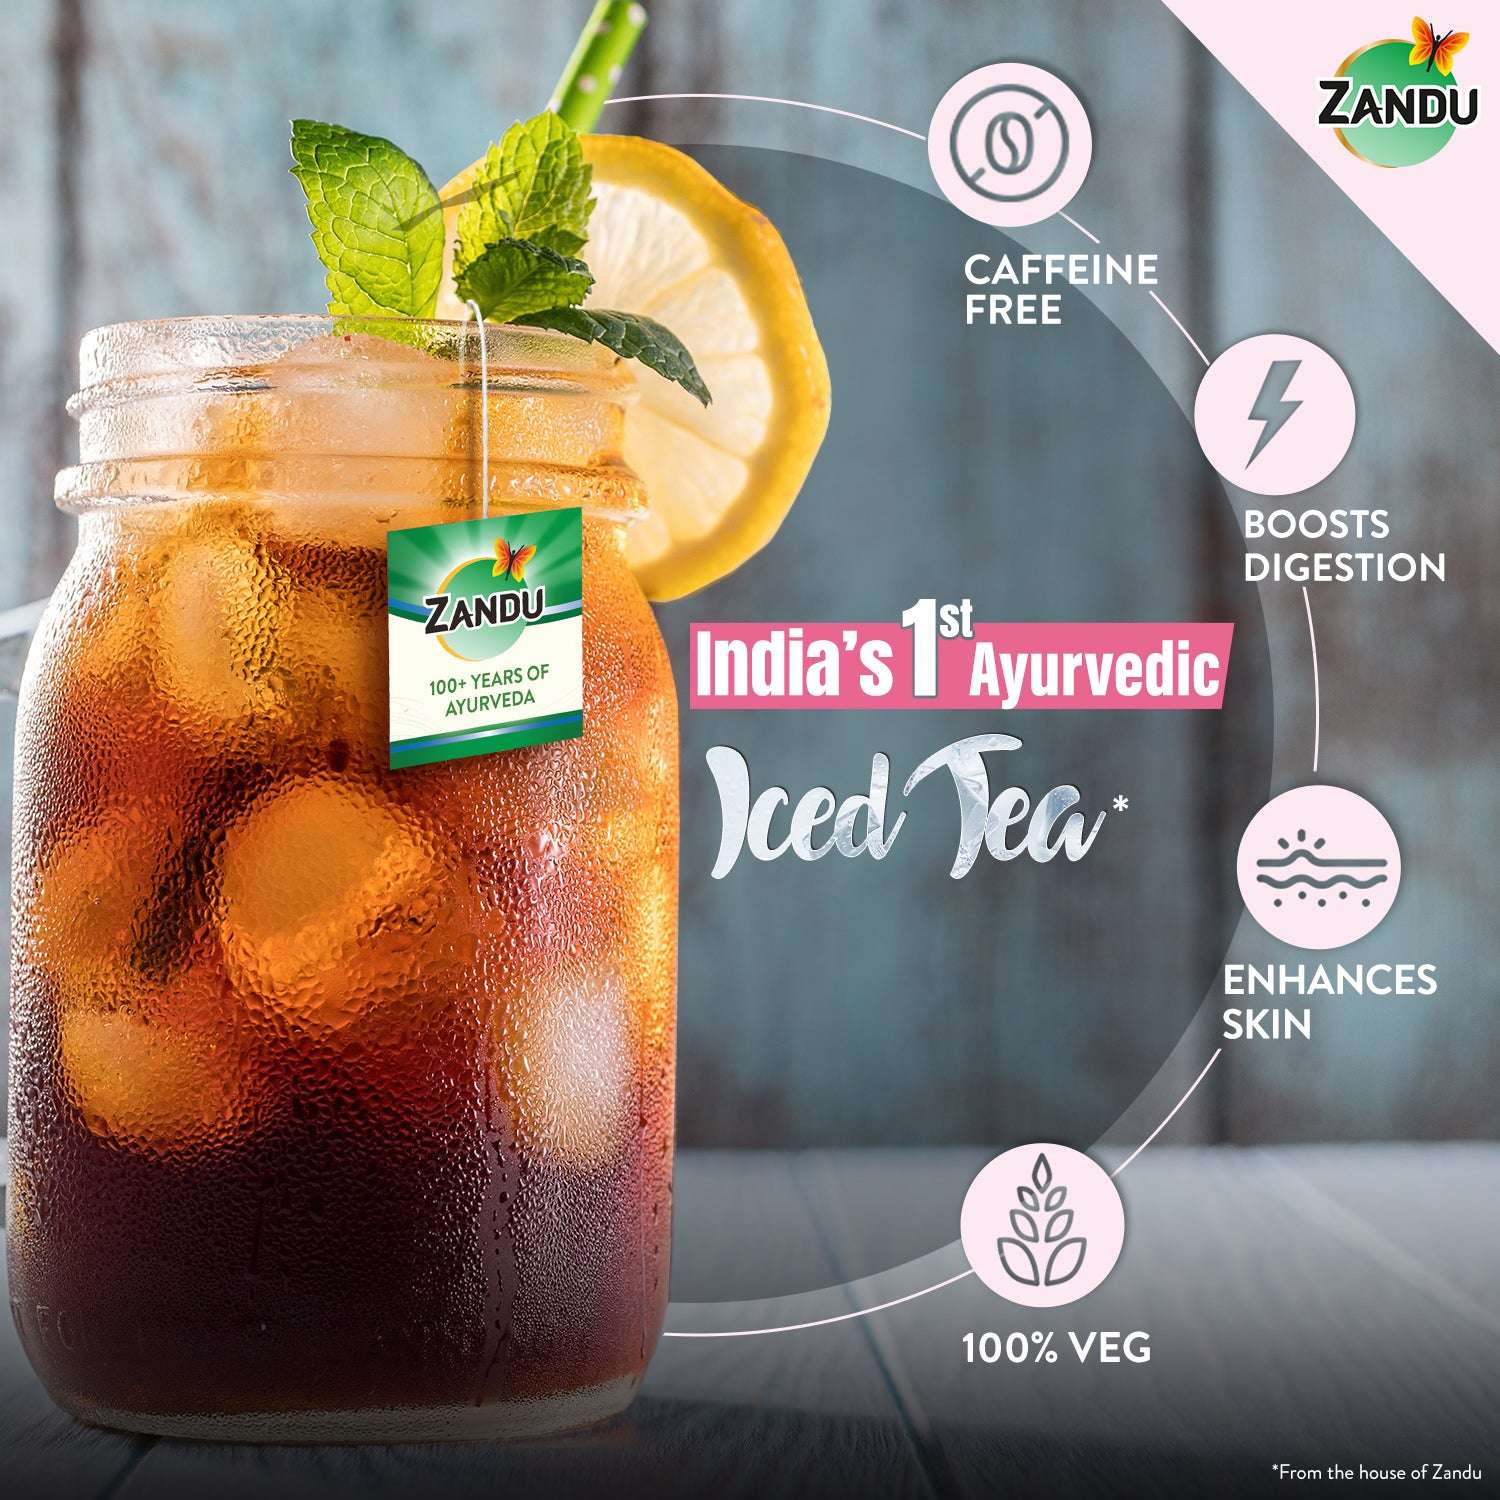 Zandu herbal ice tea benefits